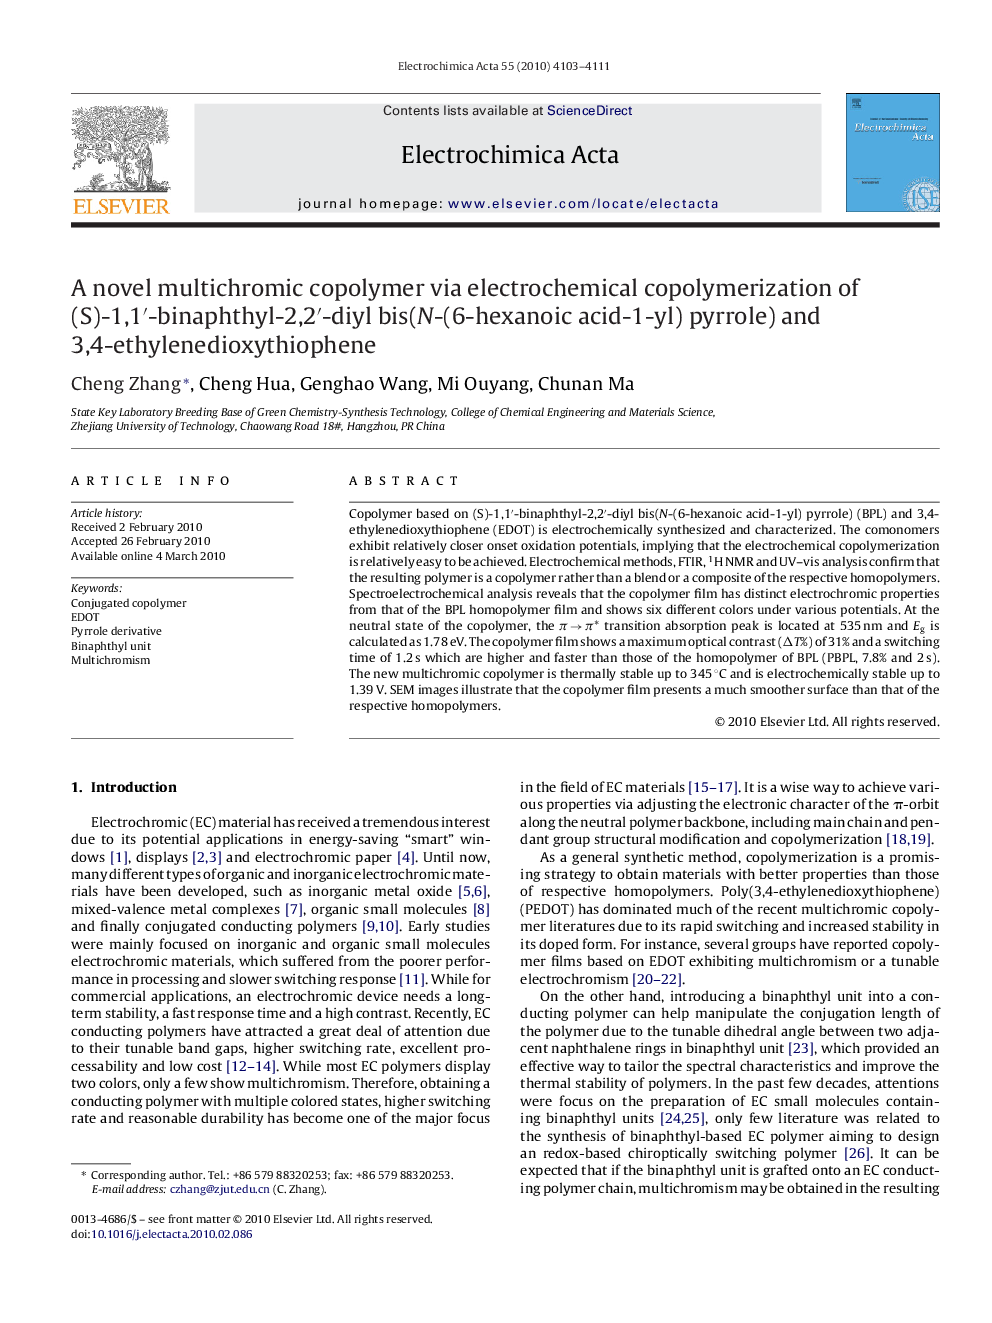 A novel multichromic copolymer via electrochemical copolymerization of (S)-1,1′-binaphthyl-2,2′-diyl bis(N-(6-hexanoic acid-1-yl) pyrrole) and 3,4-ethylenedioxythiophene